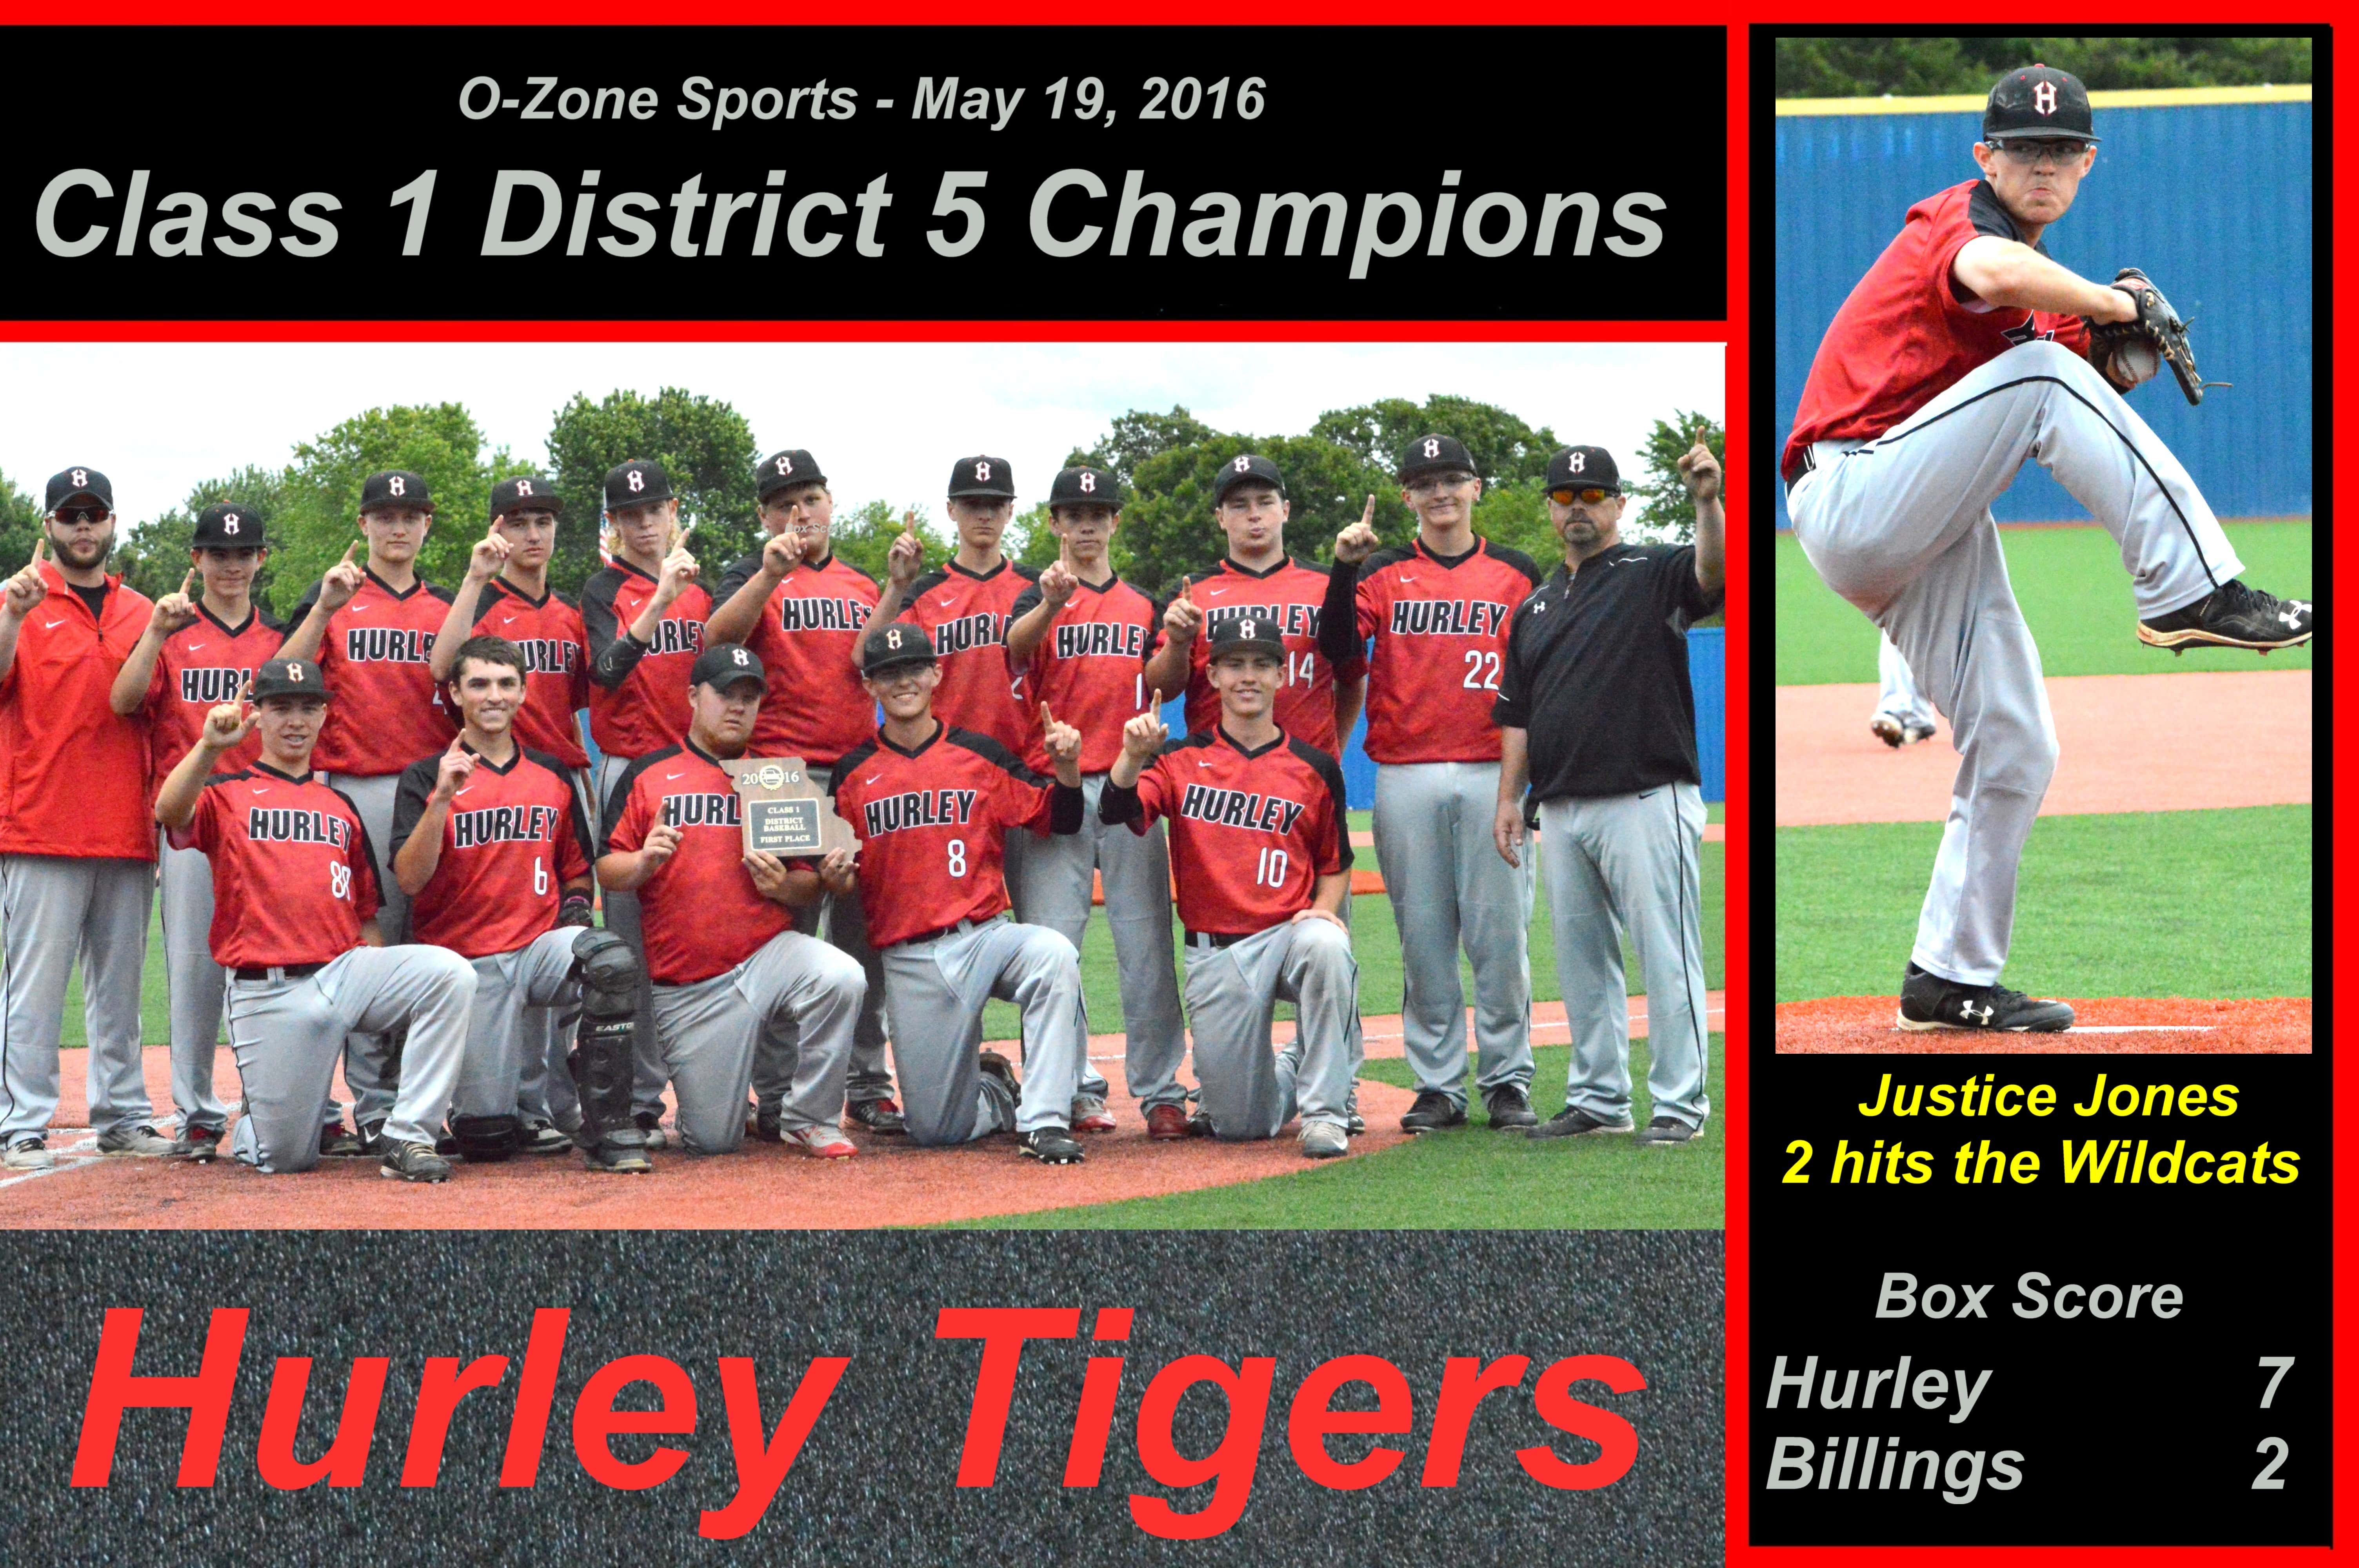 Hurley C1D5 Champions